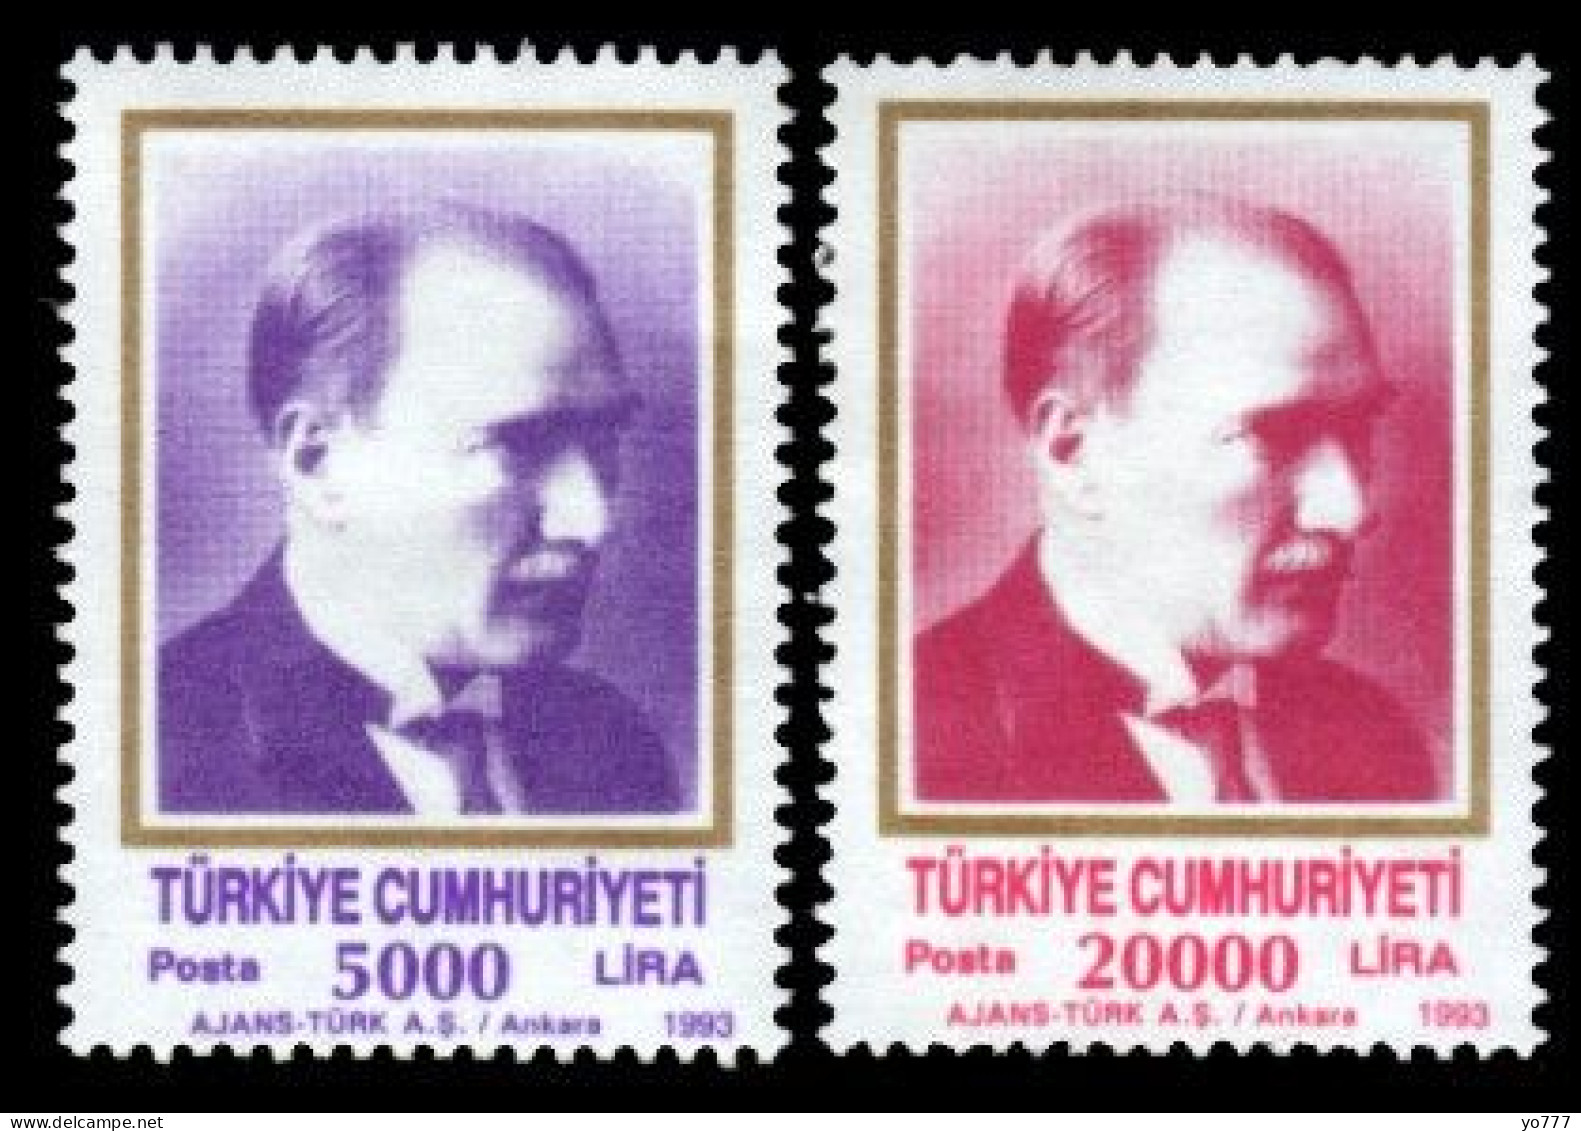 (3000-01) TURKEY REGULAR ISSUE STAMPS MNH** - Ongebruikt